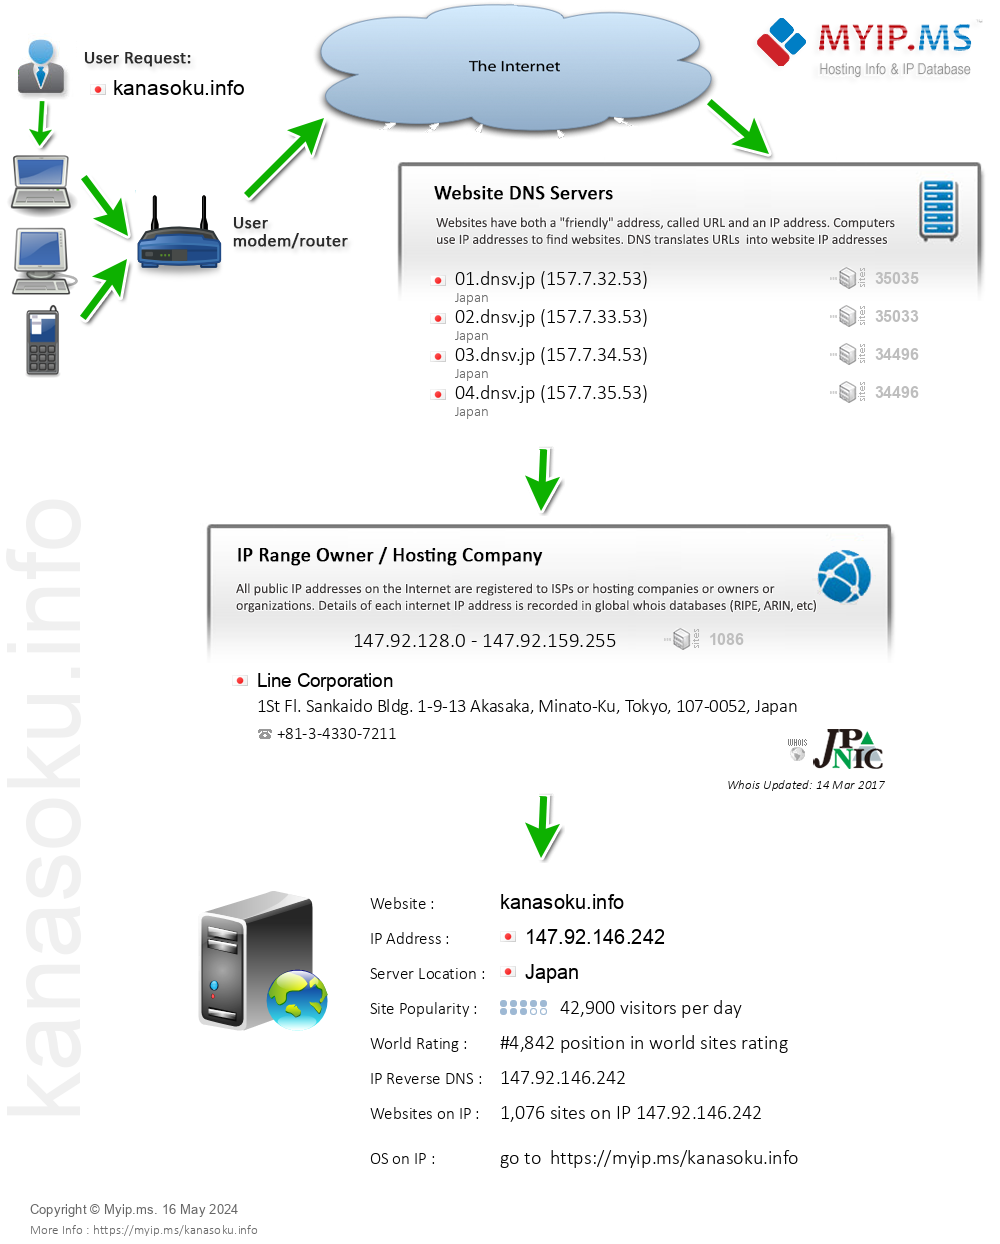 Kanasoku.info - Website Hosting Visual IP Diagram